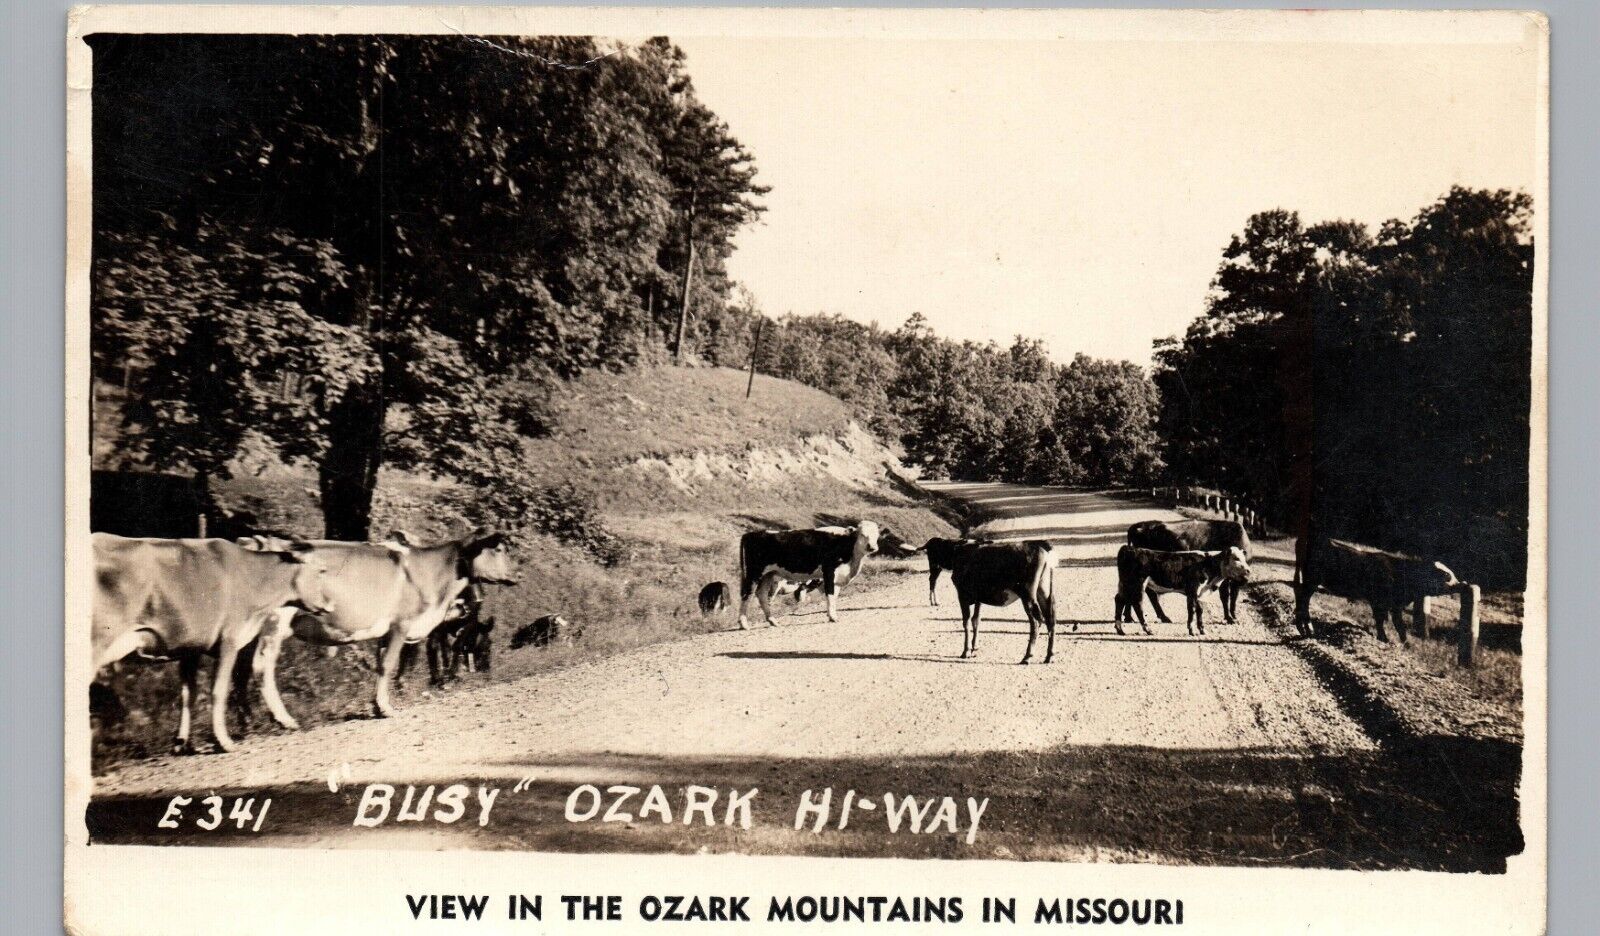 BUSY MISSOURI OZARKS HI-WAY 1940s real photo postcard rppc mo farm cows in road